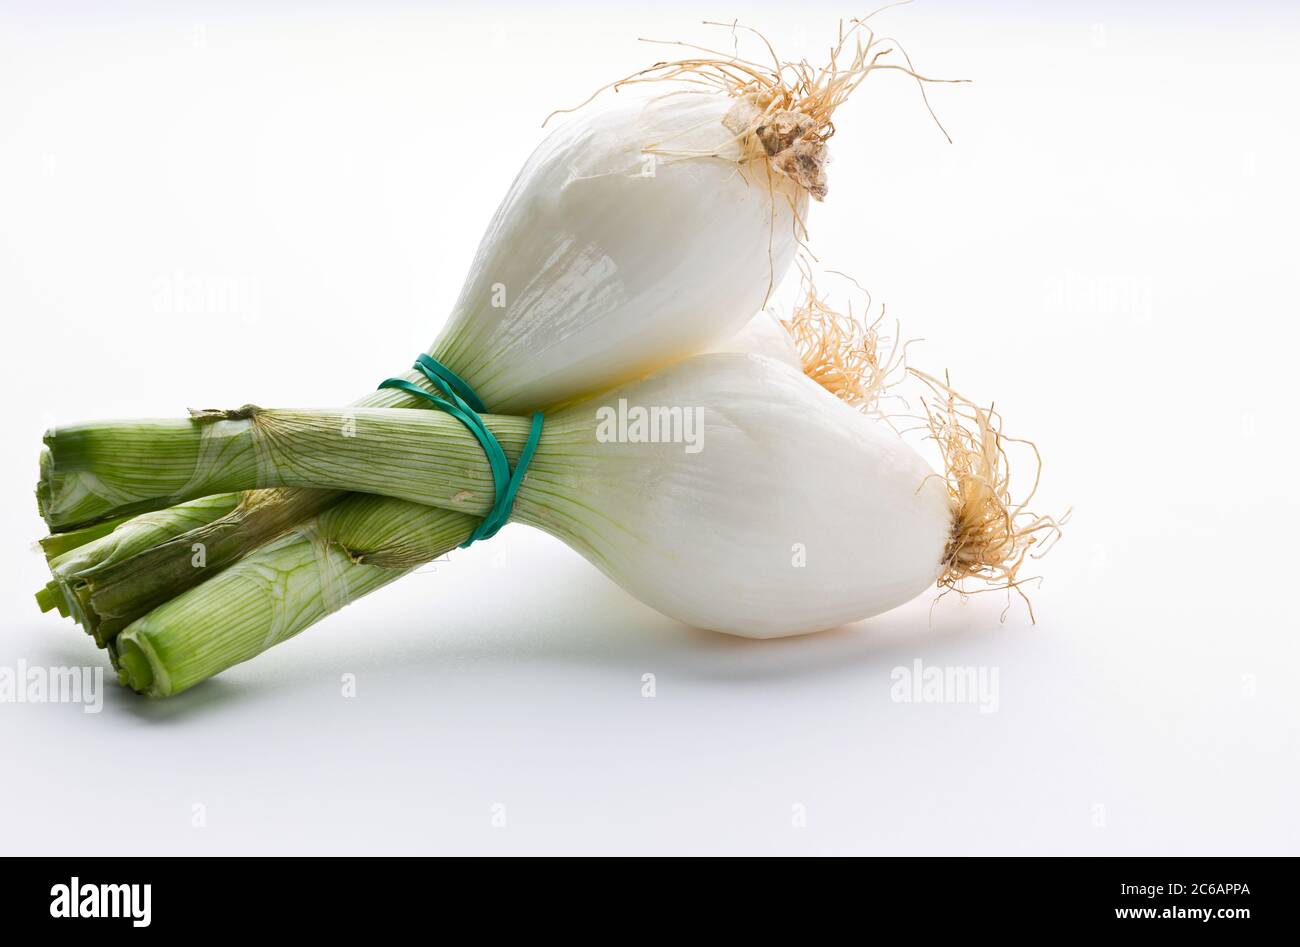 Allium fistulosum L., commonly called scallion (in Spain), green onion (in Argentina and Uruguay), green onion (in Paraguay), long onion (in Ecuador), Stock Photo